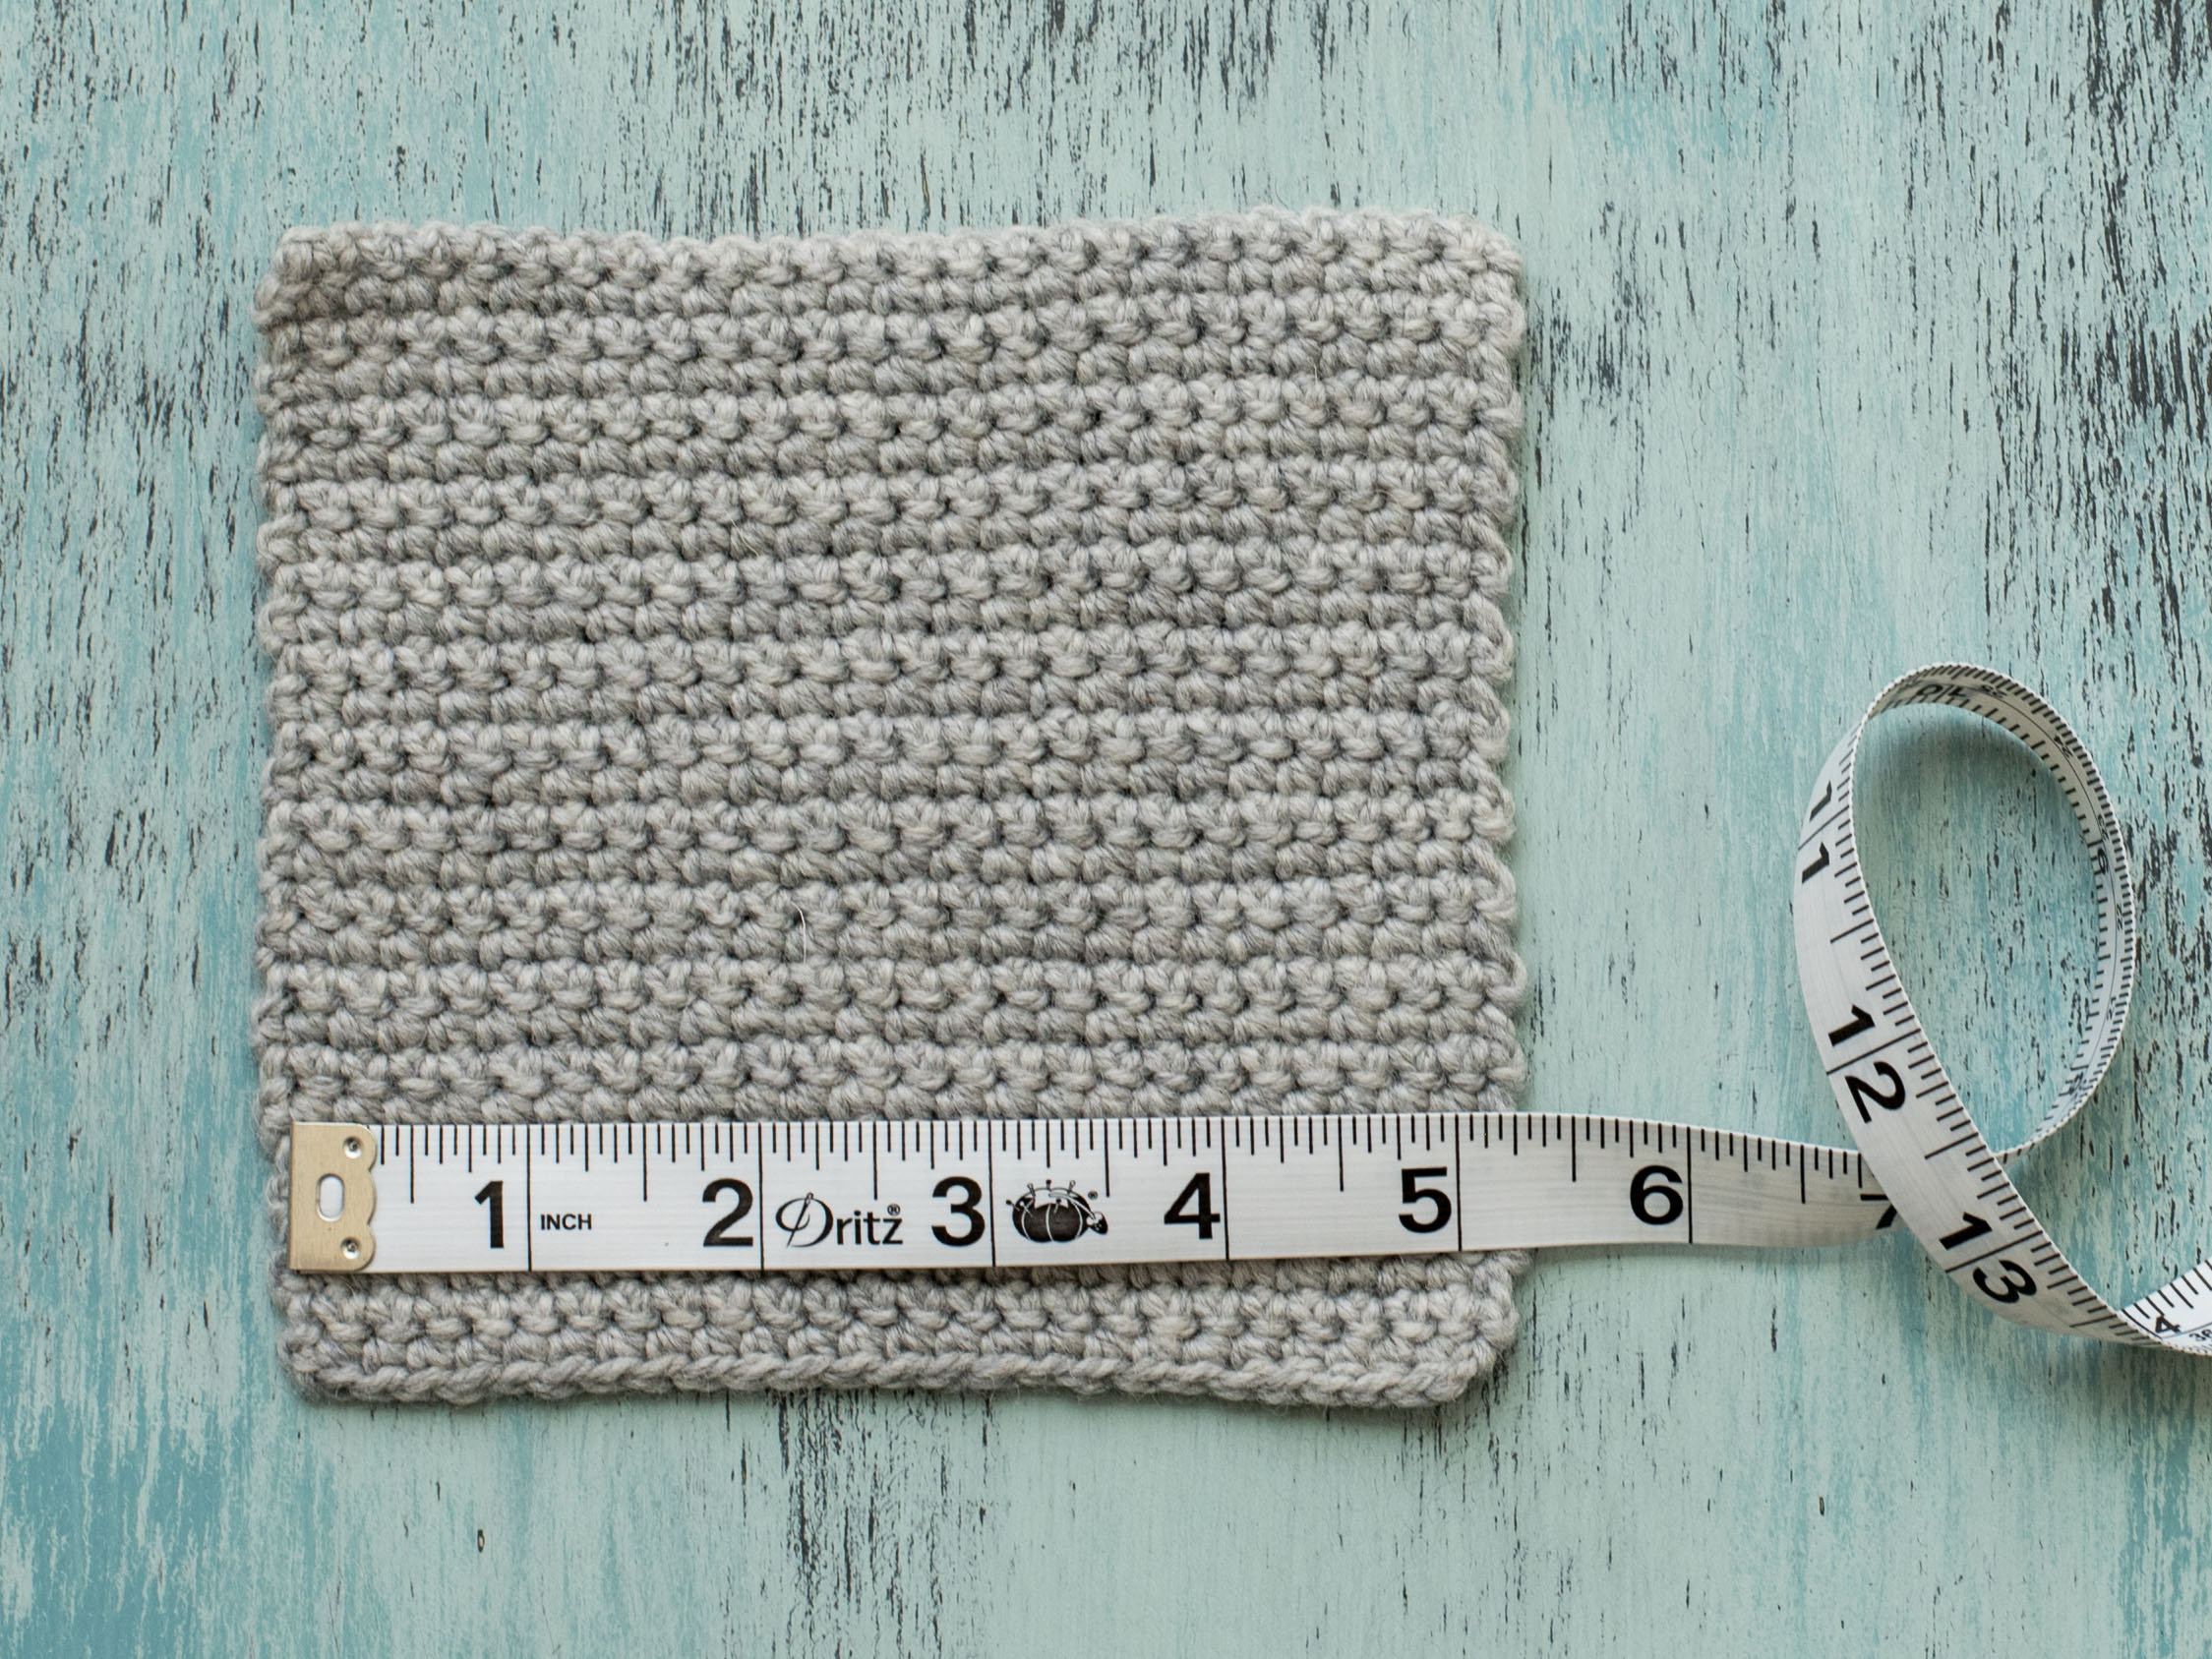 Measuring a Gray Crochet Swatch